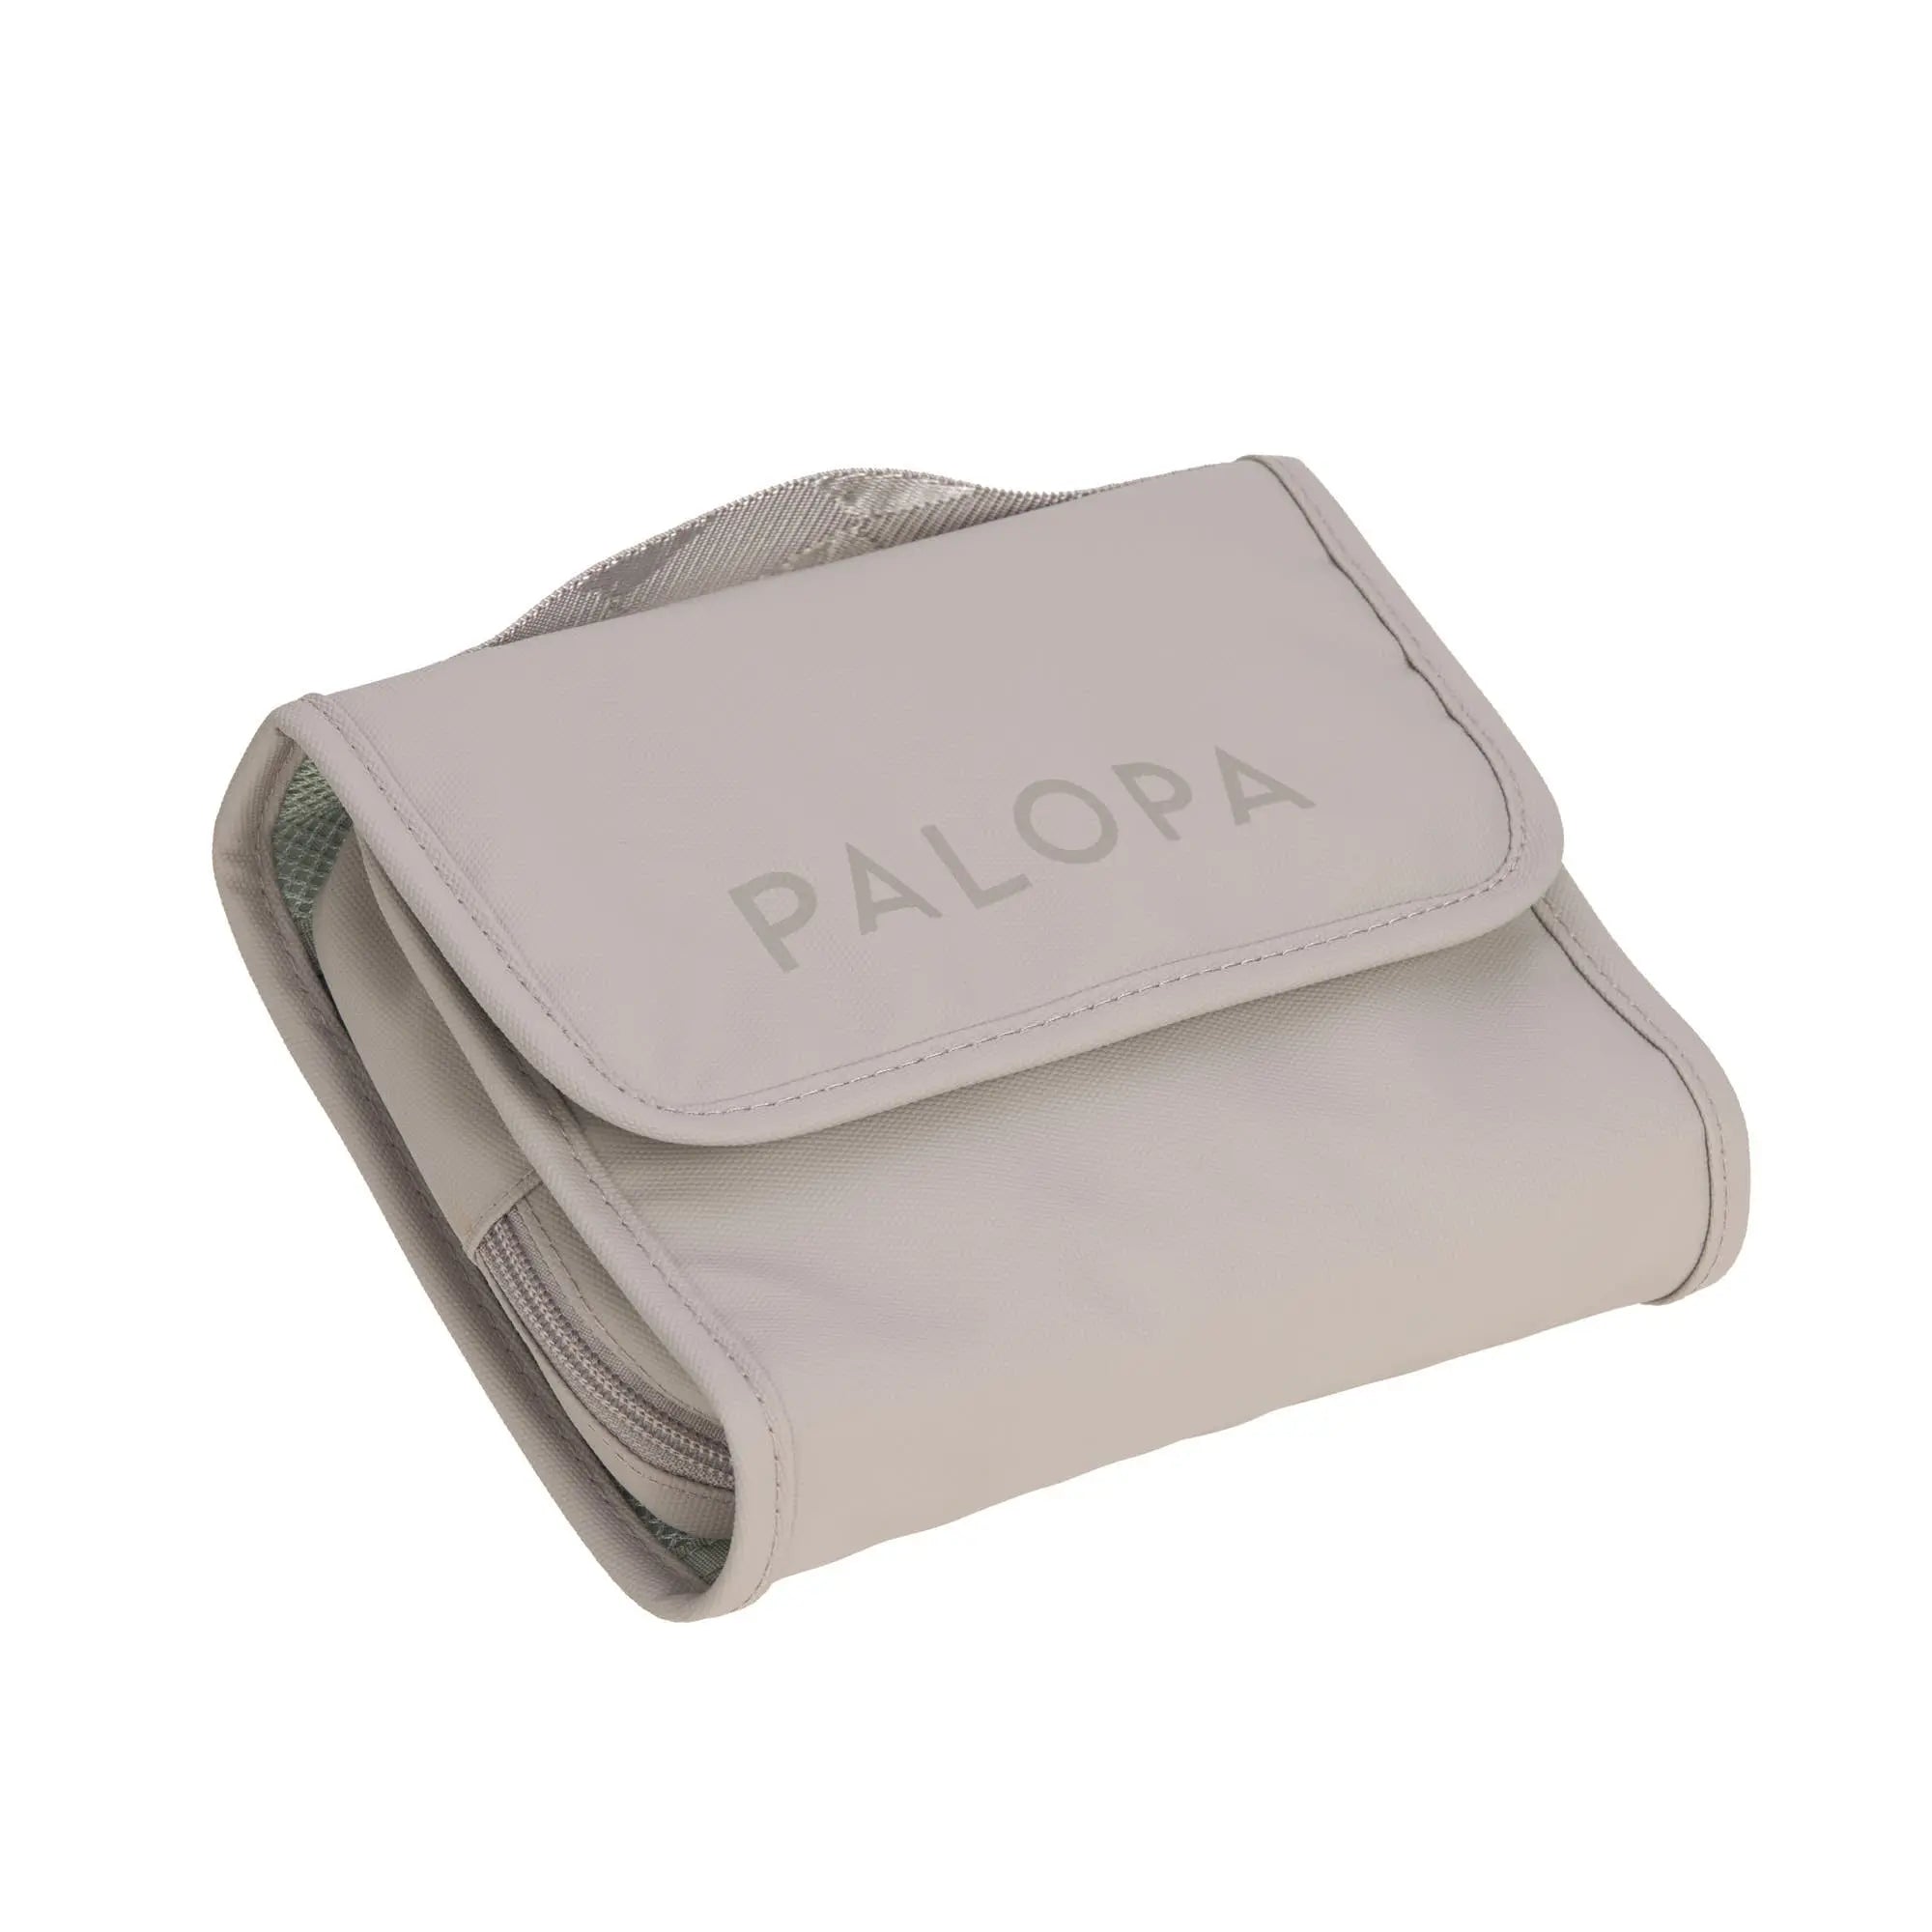 First Aid Kit Bano taupe - PALOPA